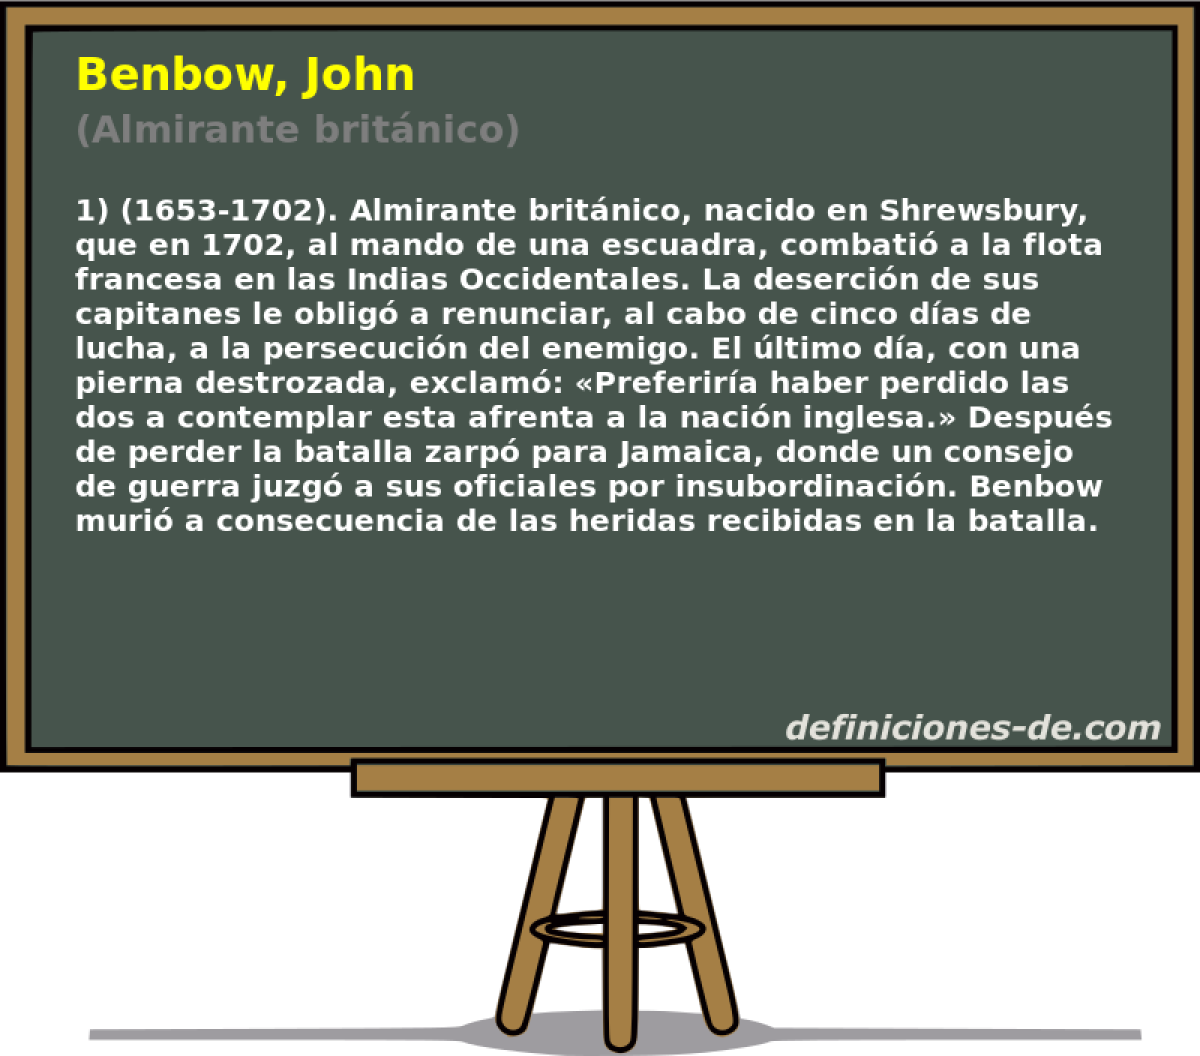 Benbow, John (Almirante britnico)